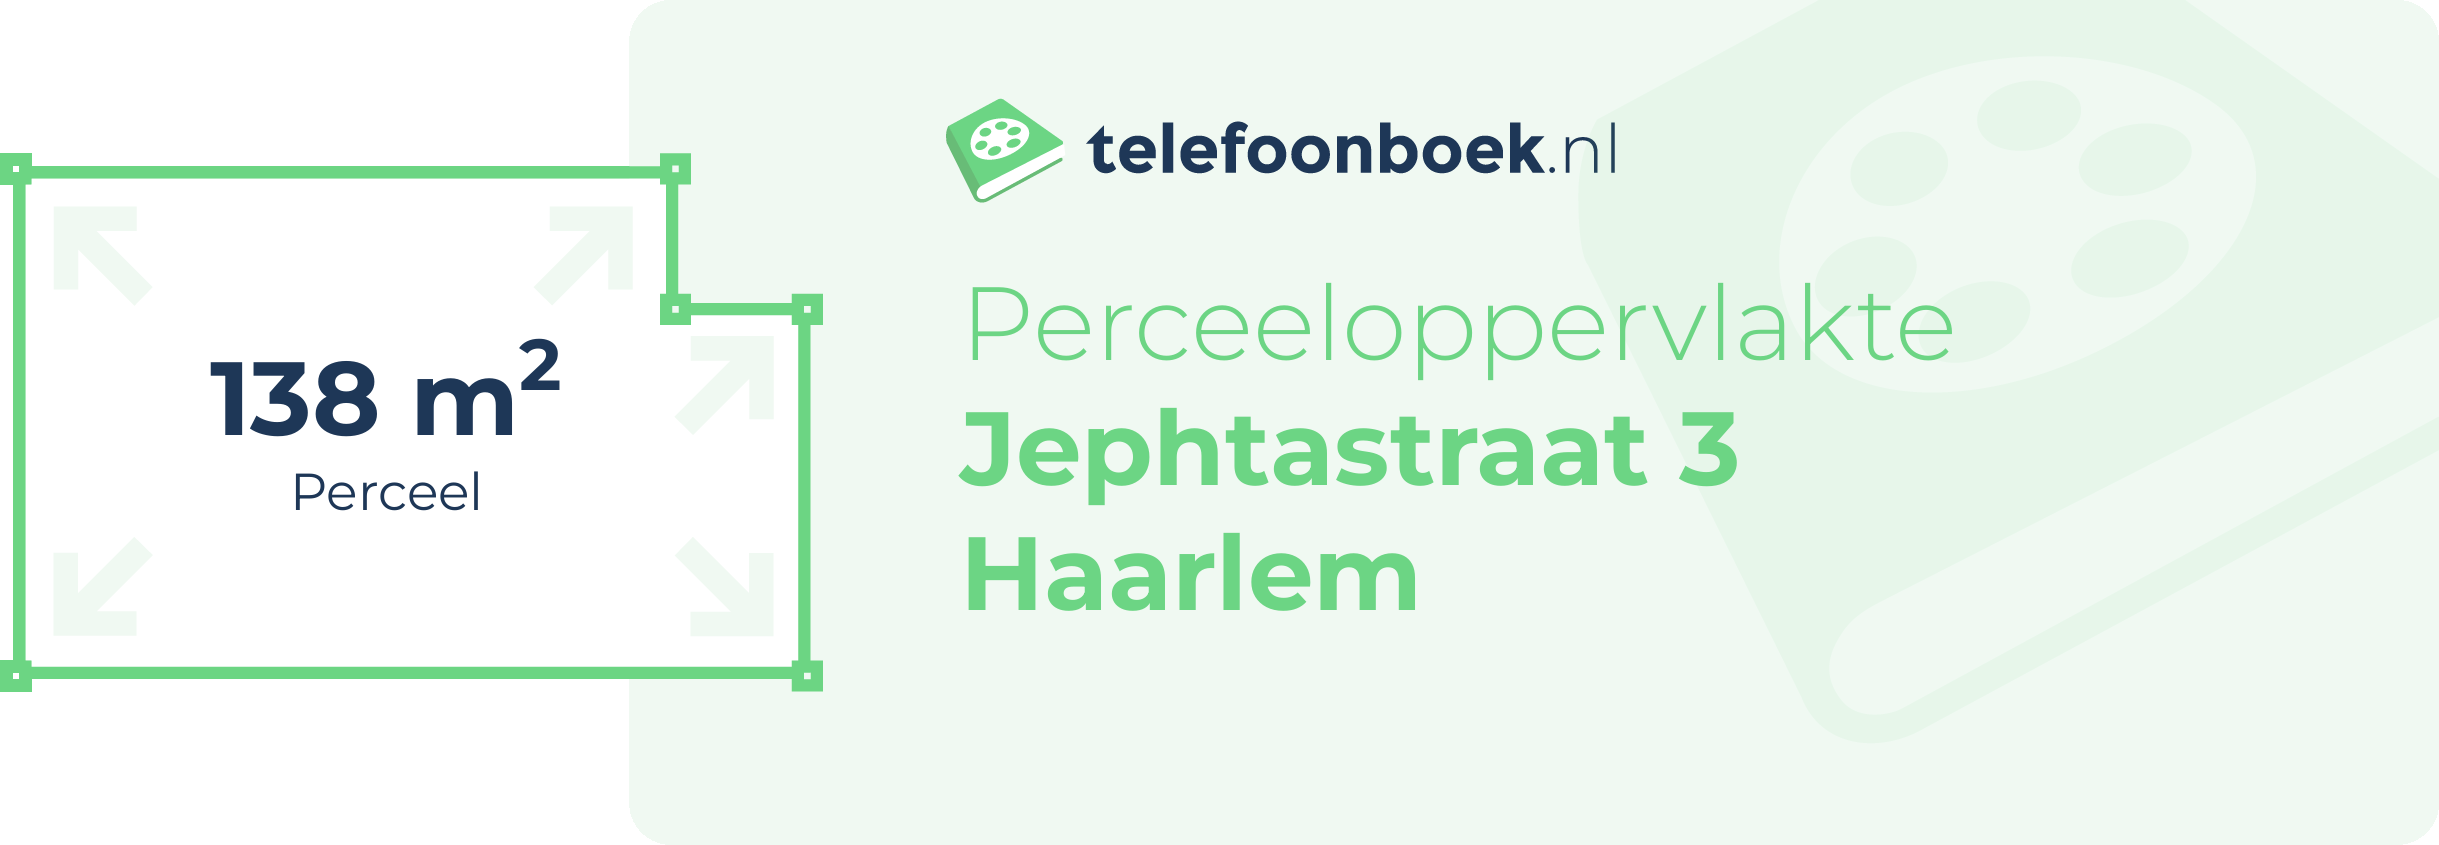 Perceeloppervlakte Jephtastraat 3 Haarlem